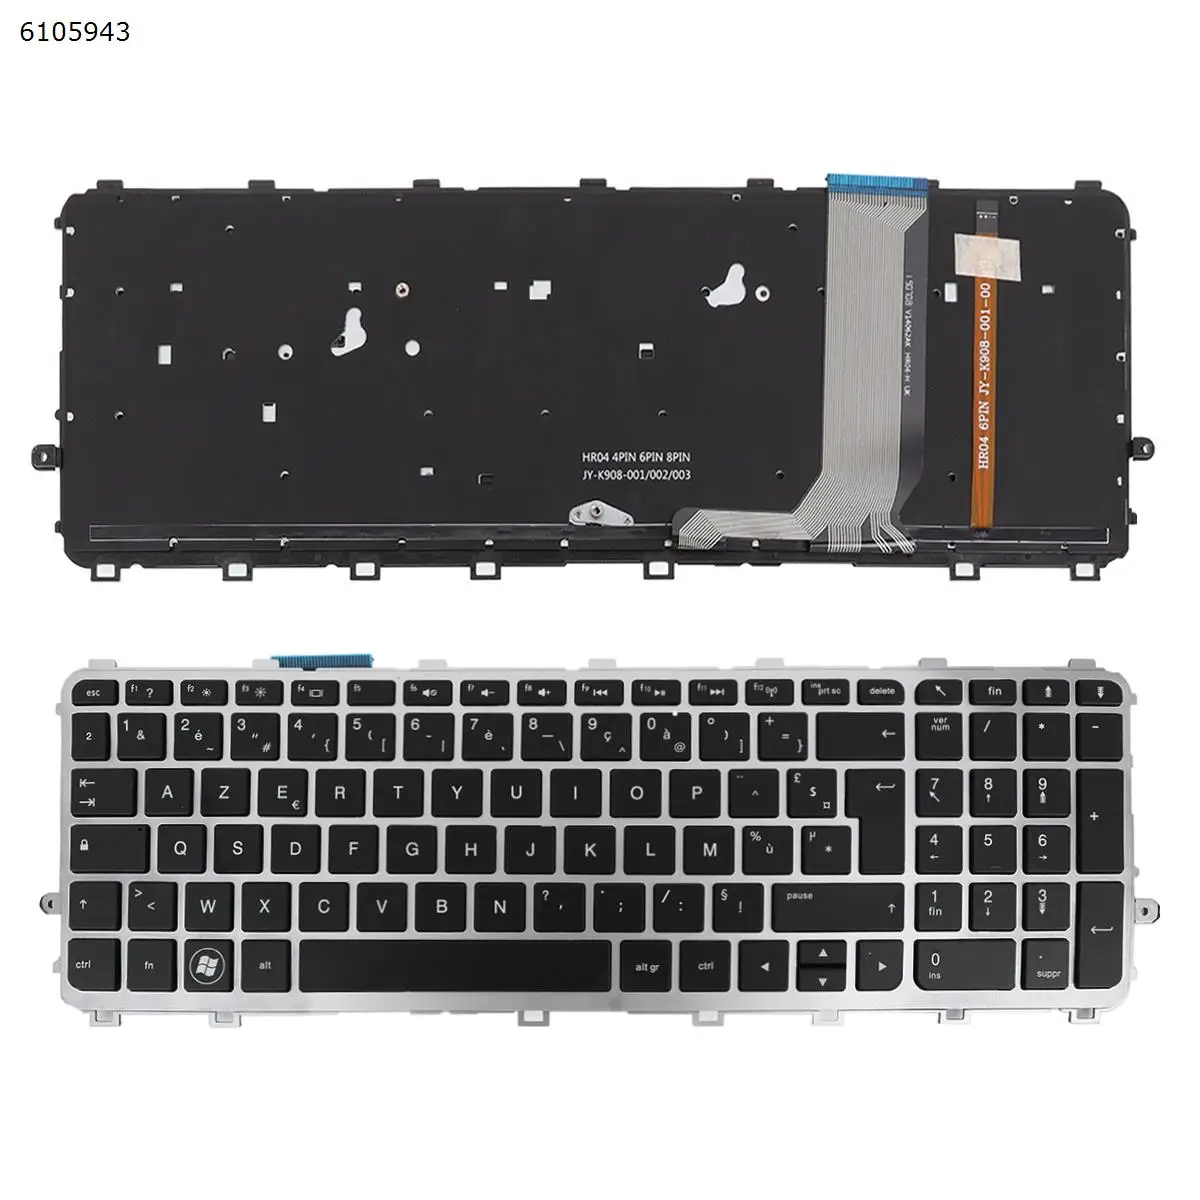 

French AZERTY New Keyboard for HP ENVY 15-J 15-J000 15t-j000 15t-j100 15z-j000 15z-j100 Laptop Silver Frame with Backlit